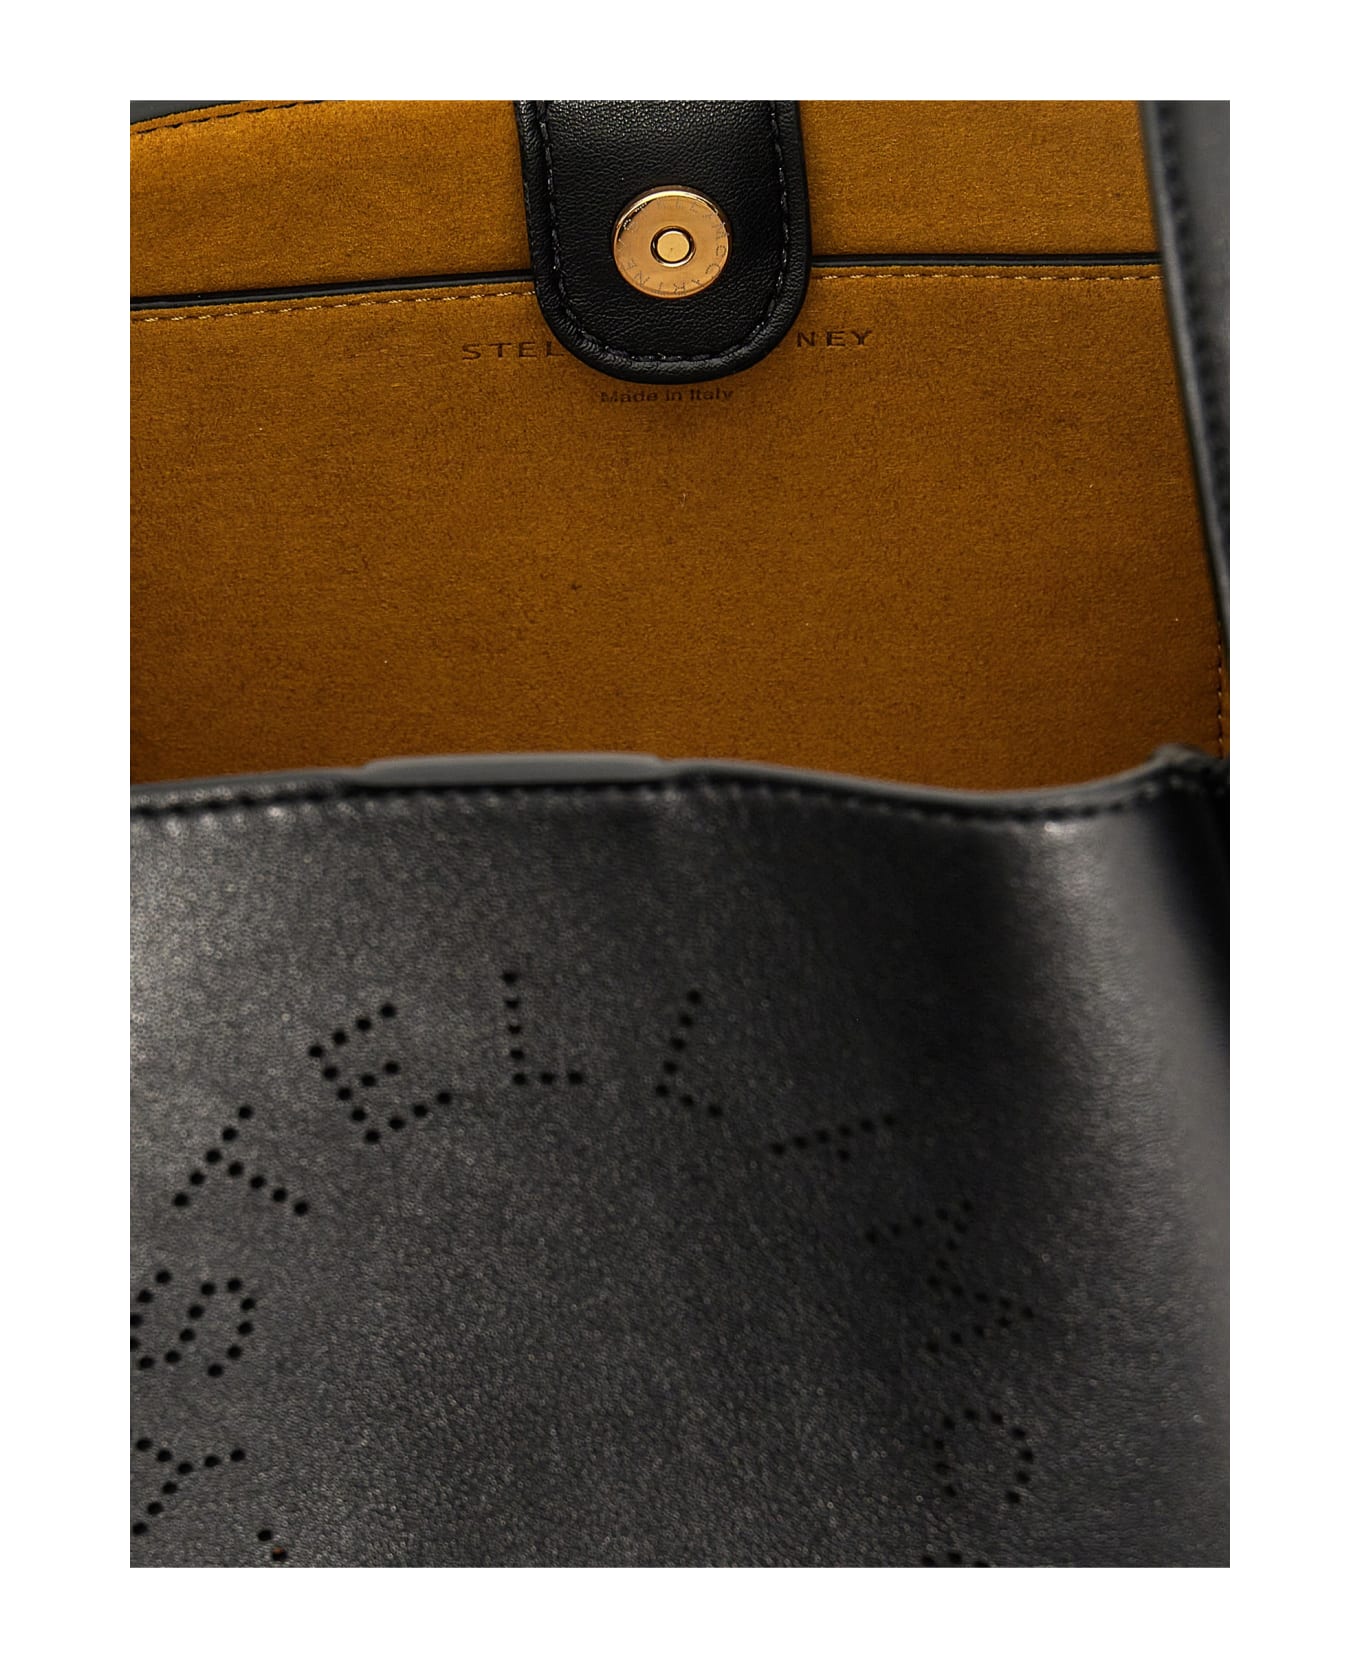 Stella McCartney 'logo' Handbag - Black トートバッグ